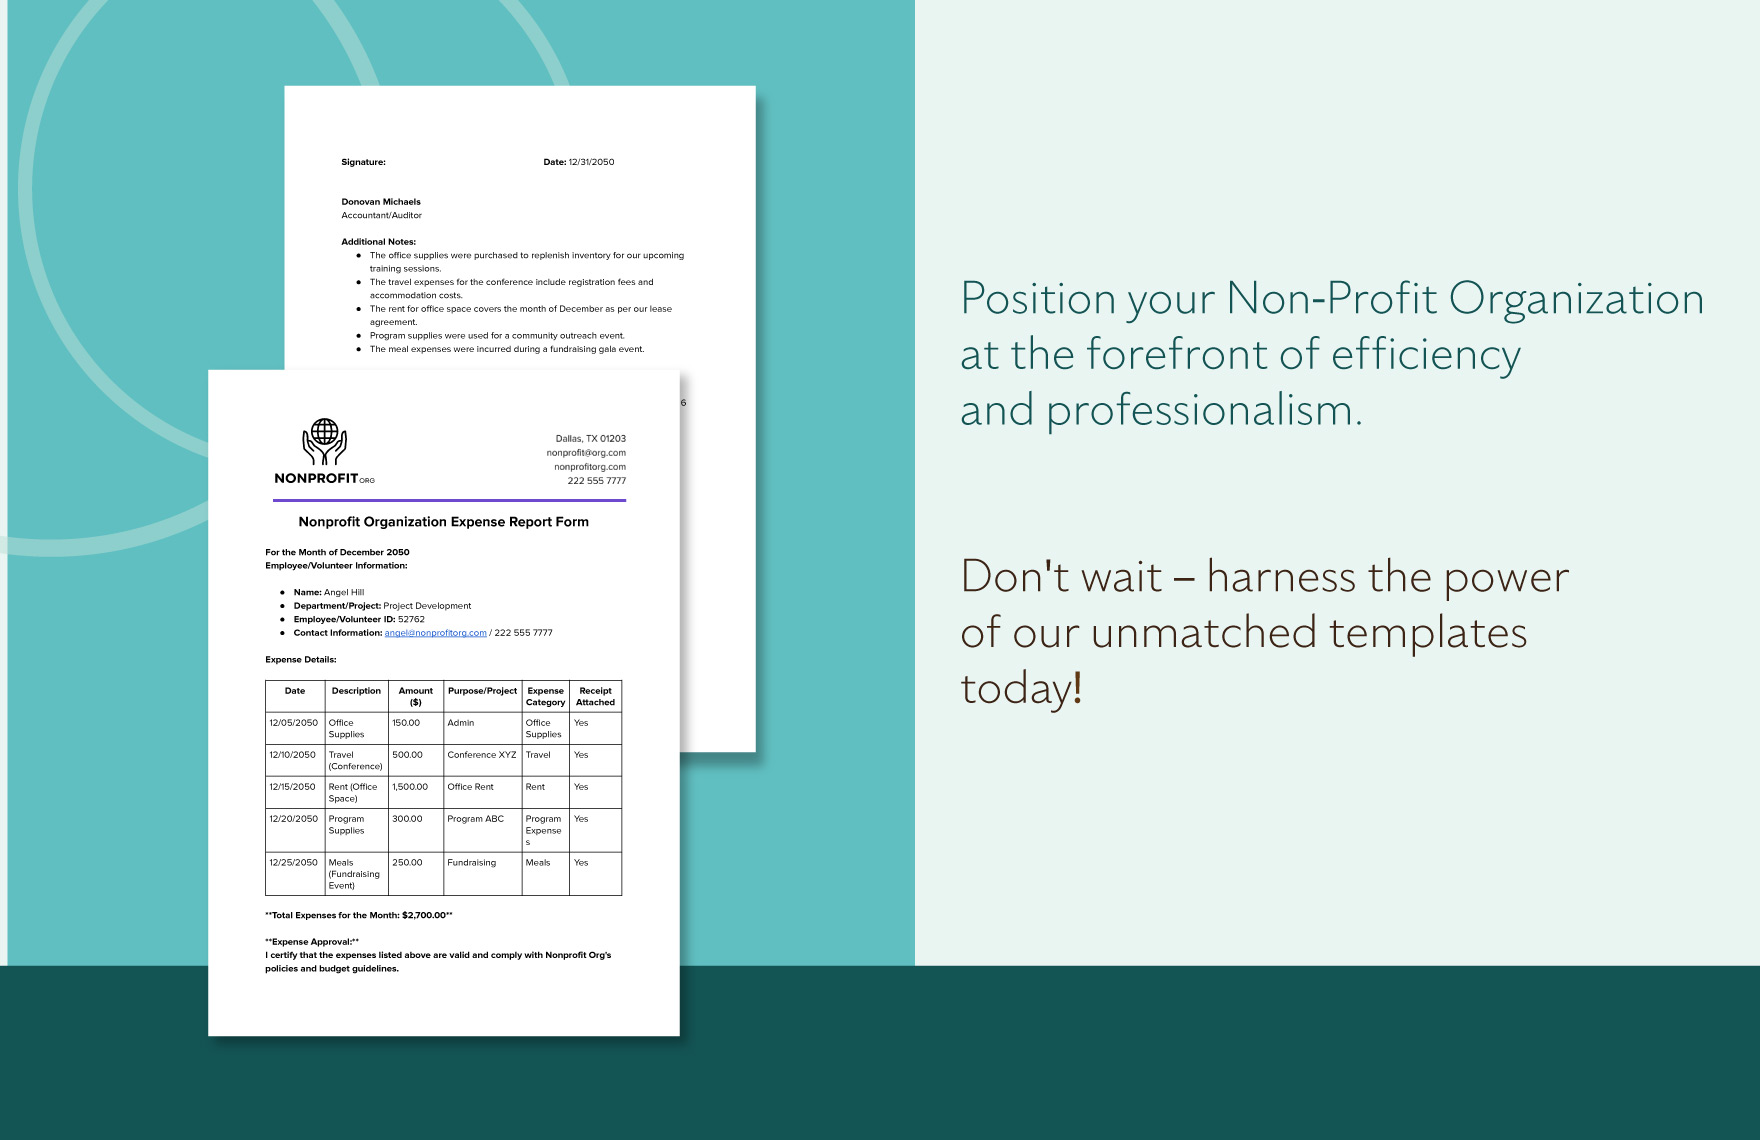 Nonprofit Organization Expense Report Form Template